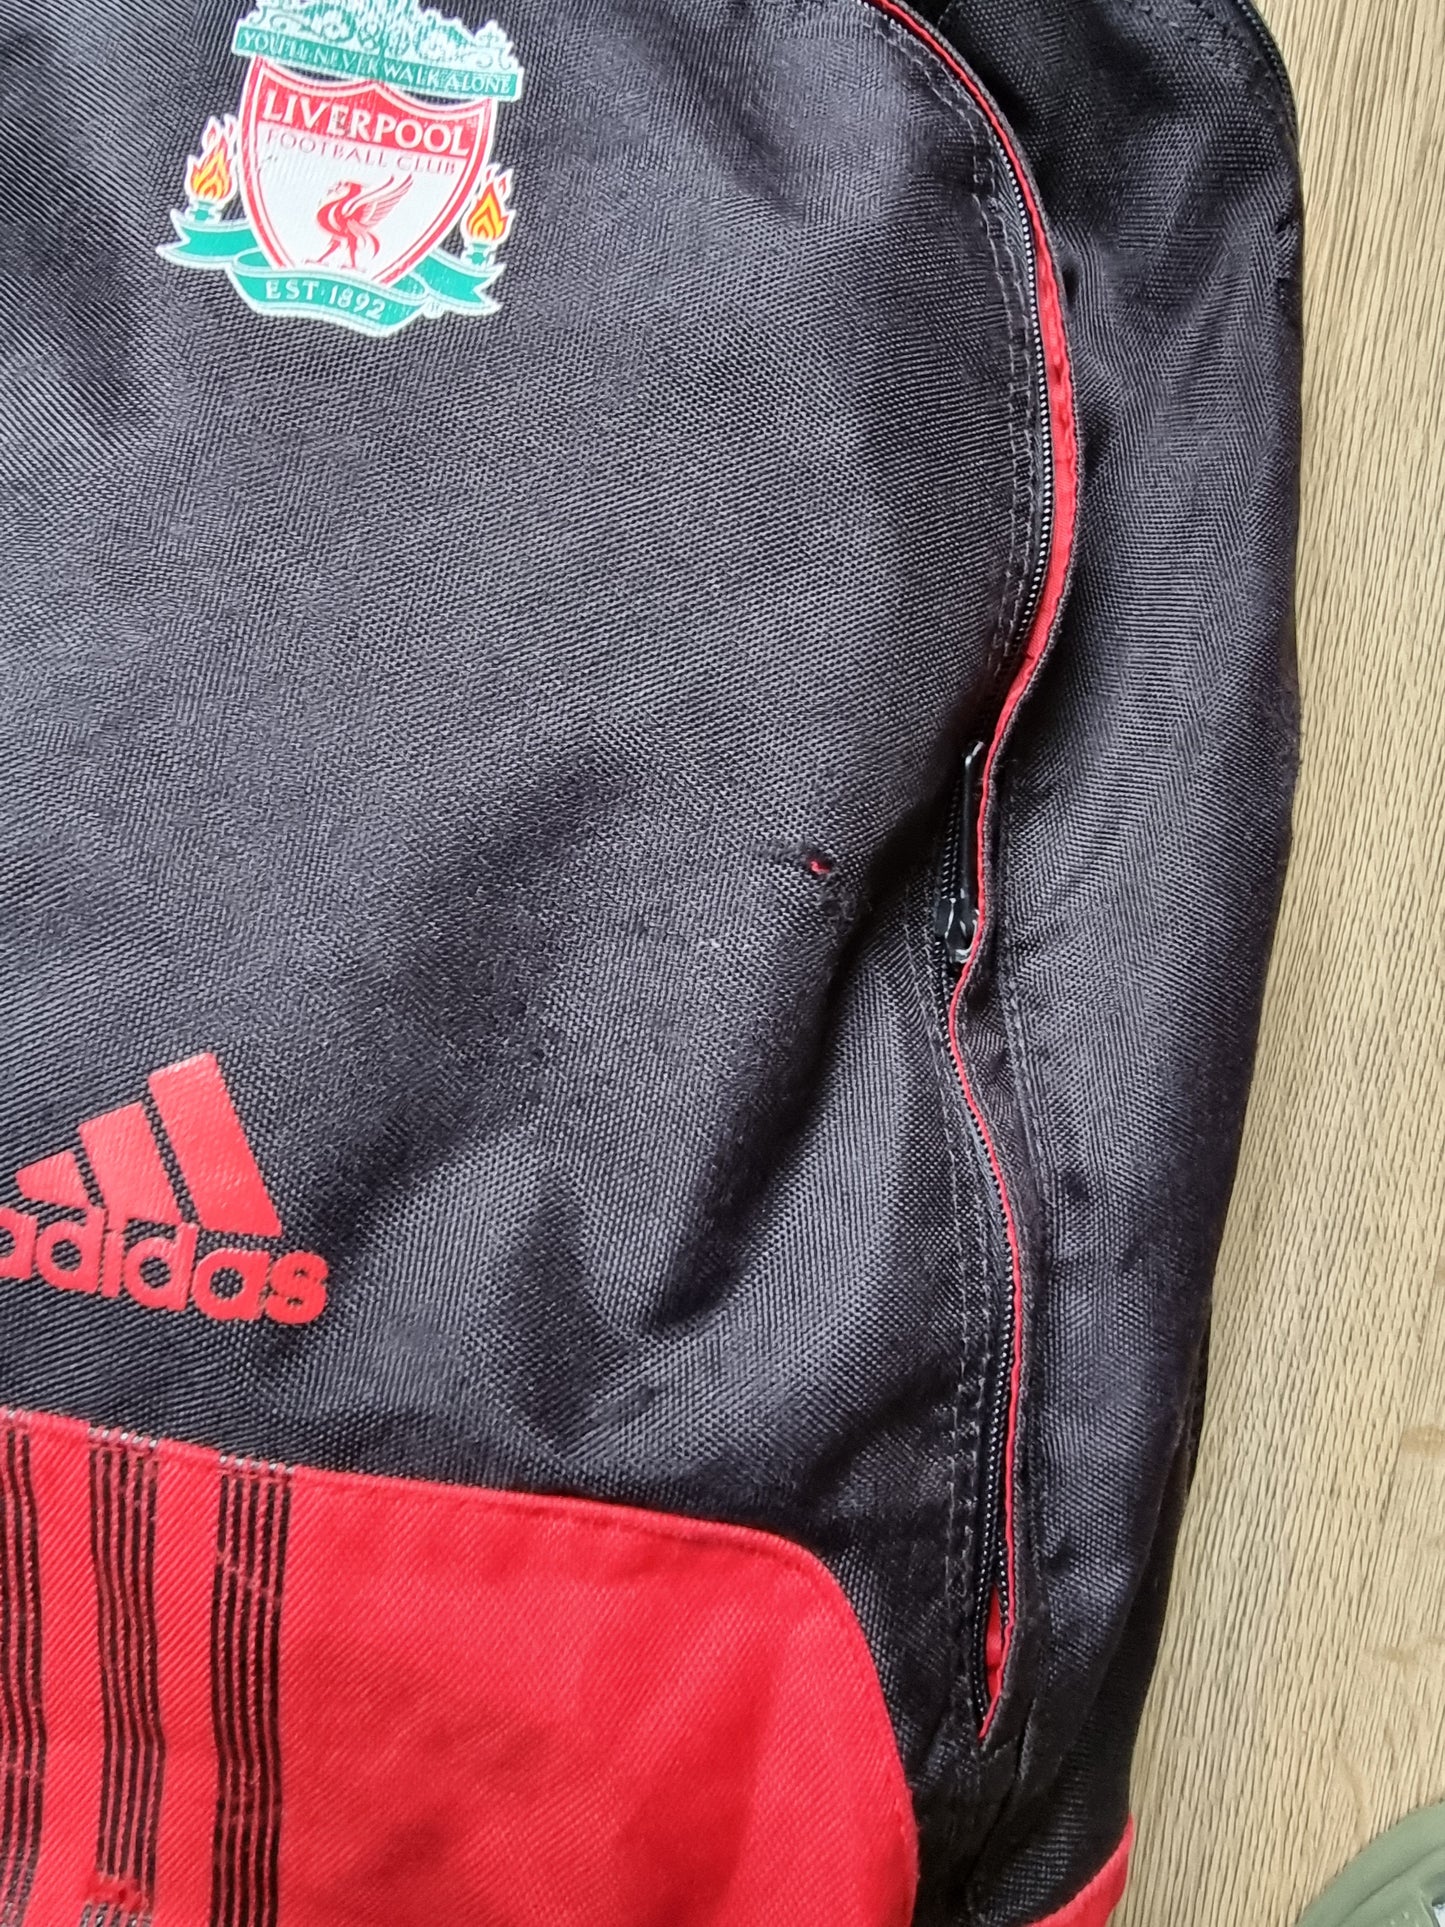 Adidas Liverpool 2010 Backpack